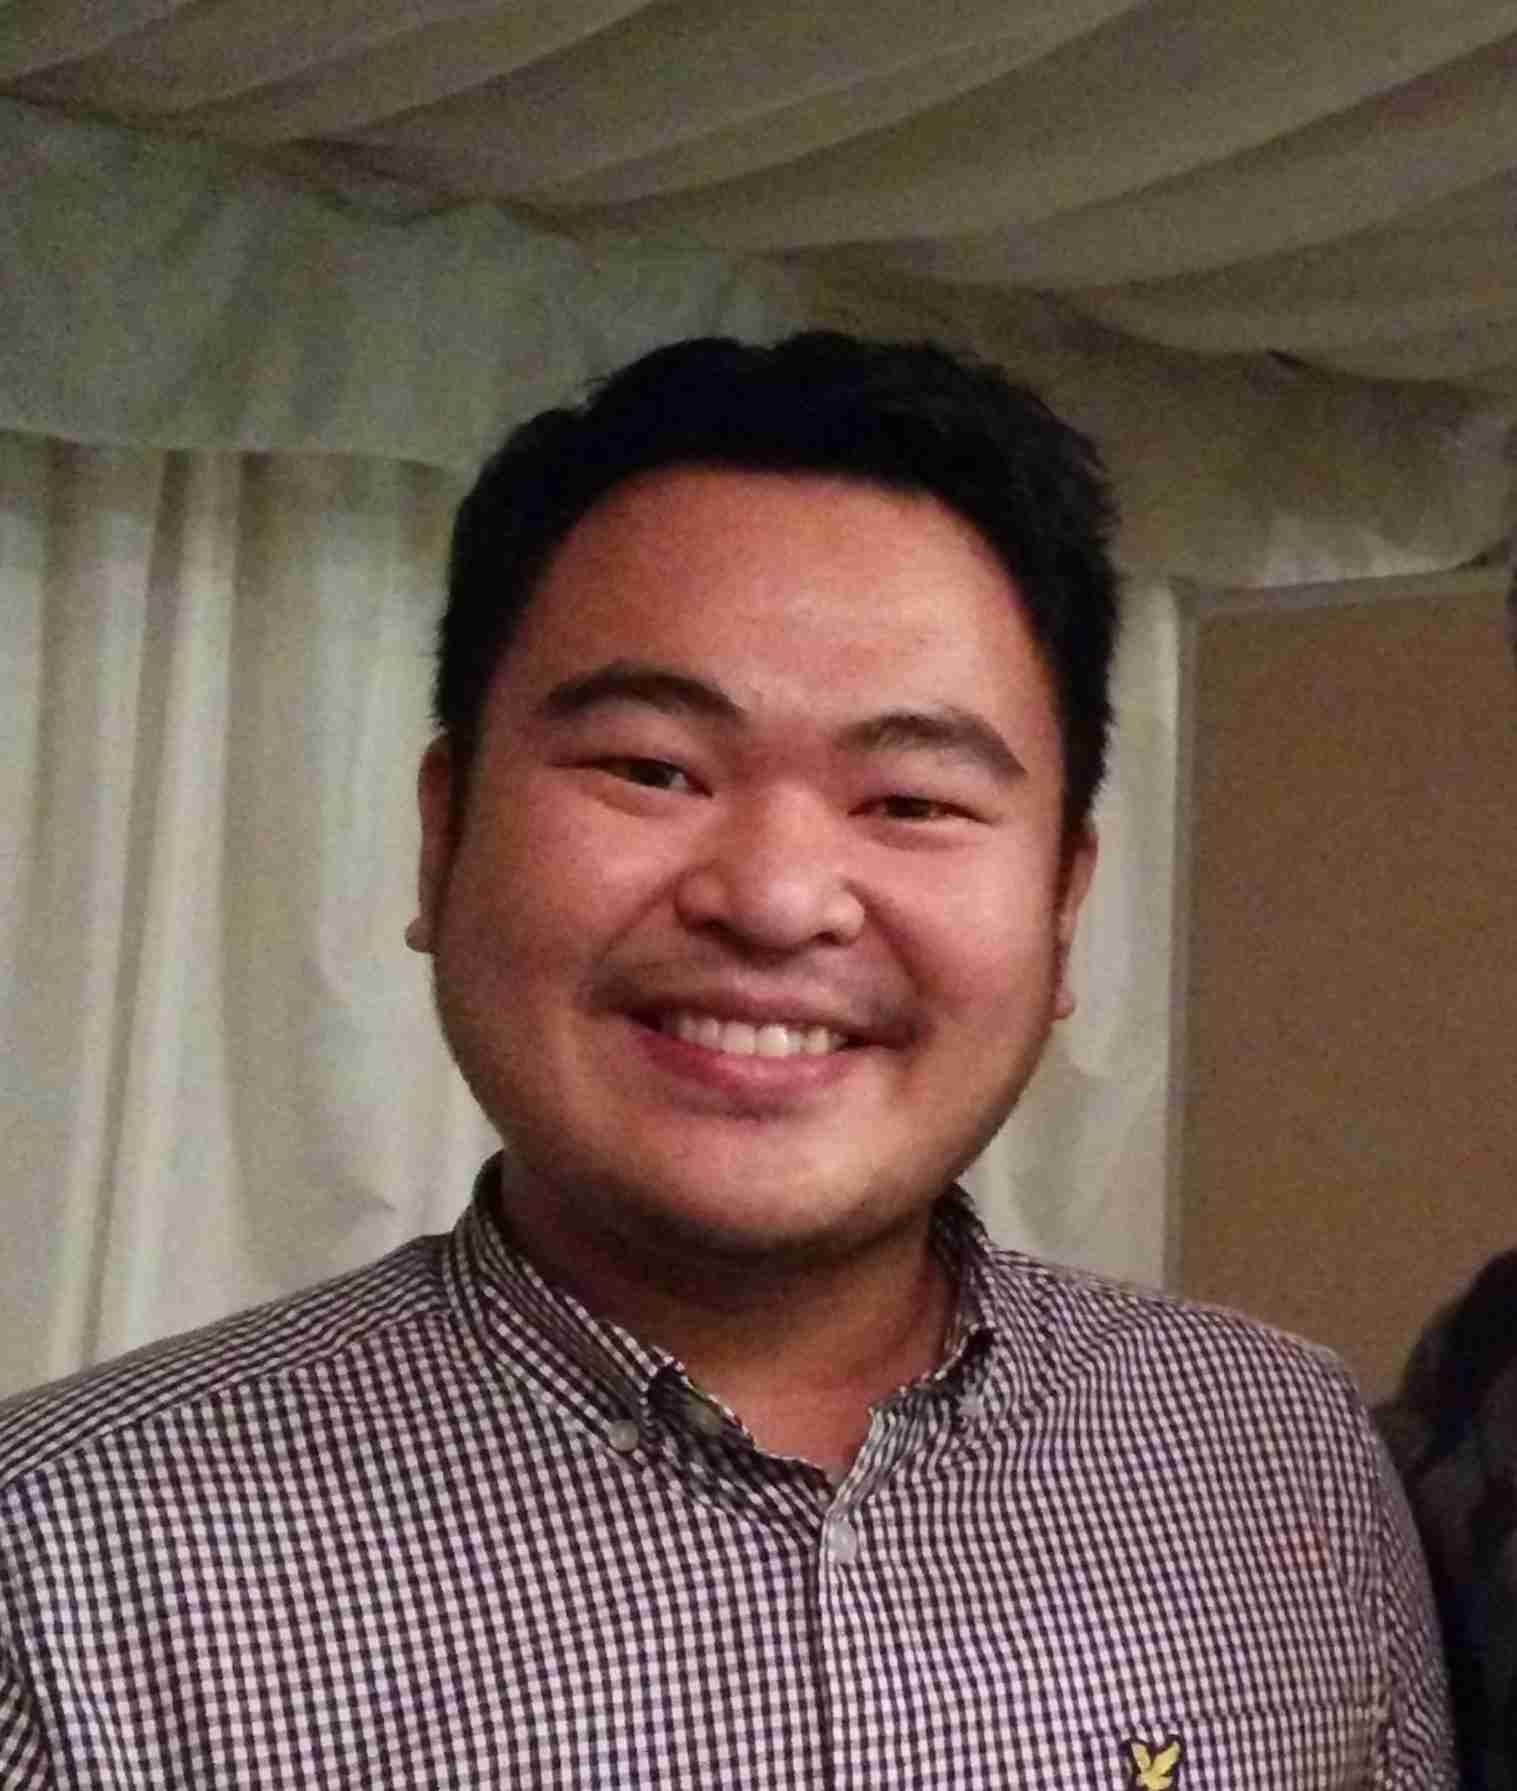 Profile image of Dr SENDY PHANG